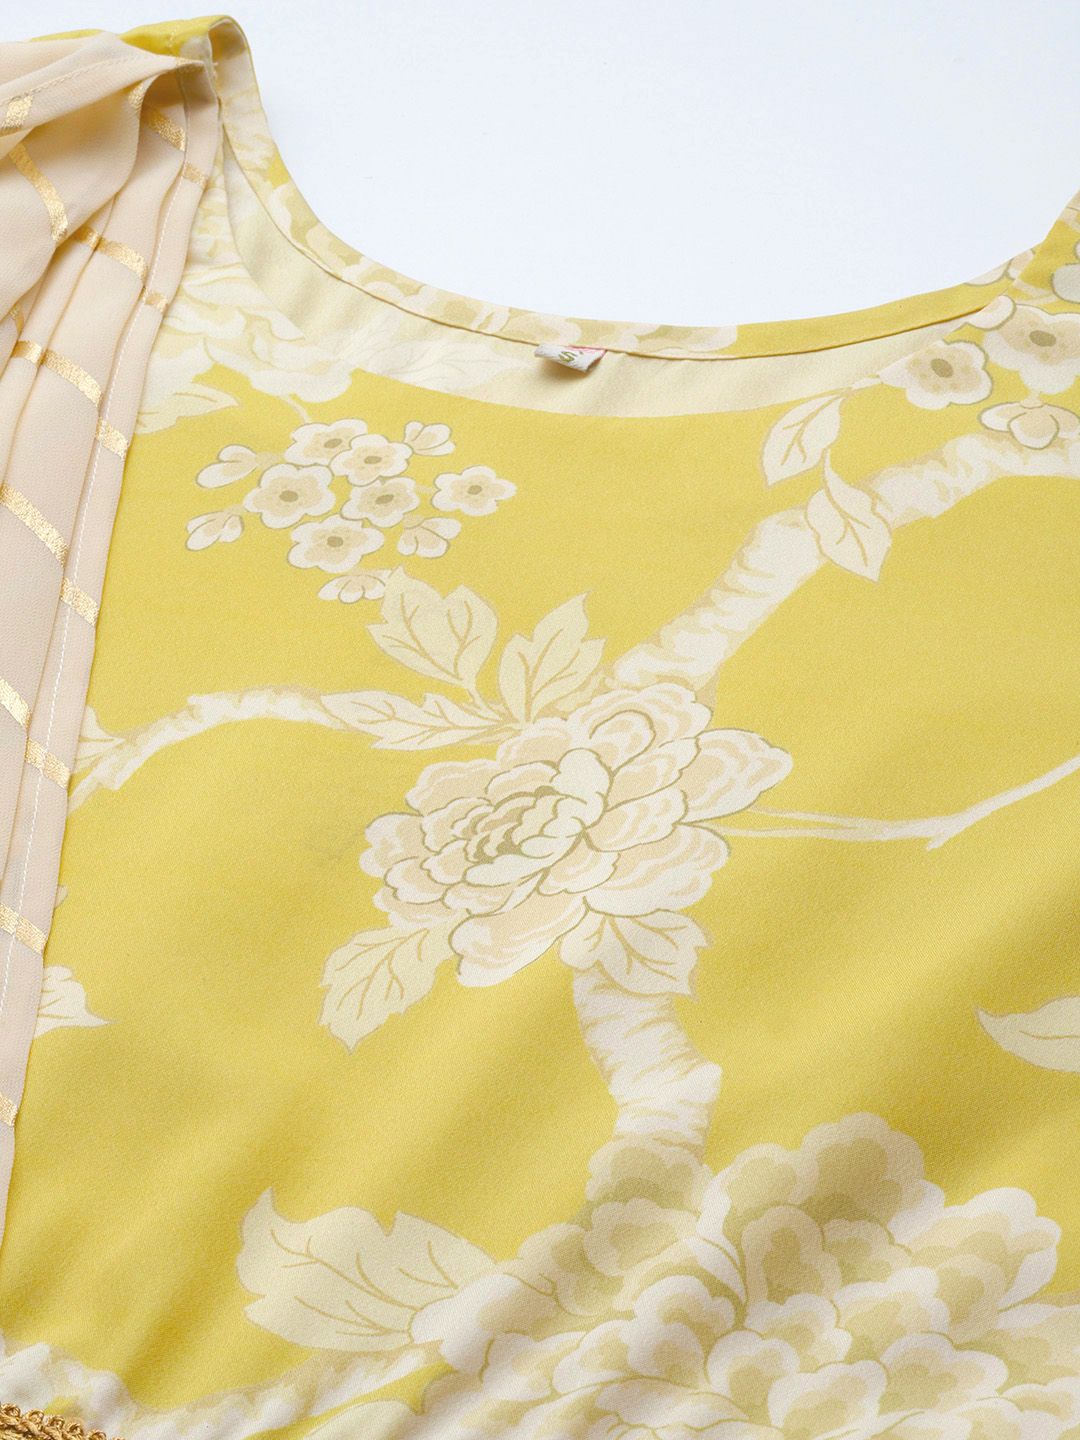 Yellow Digital Printed Draped Dress